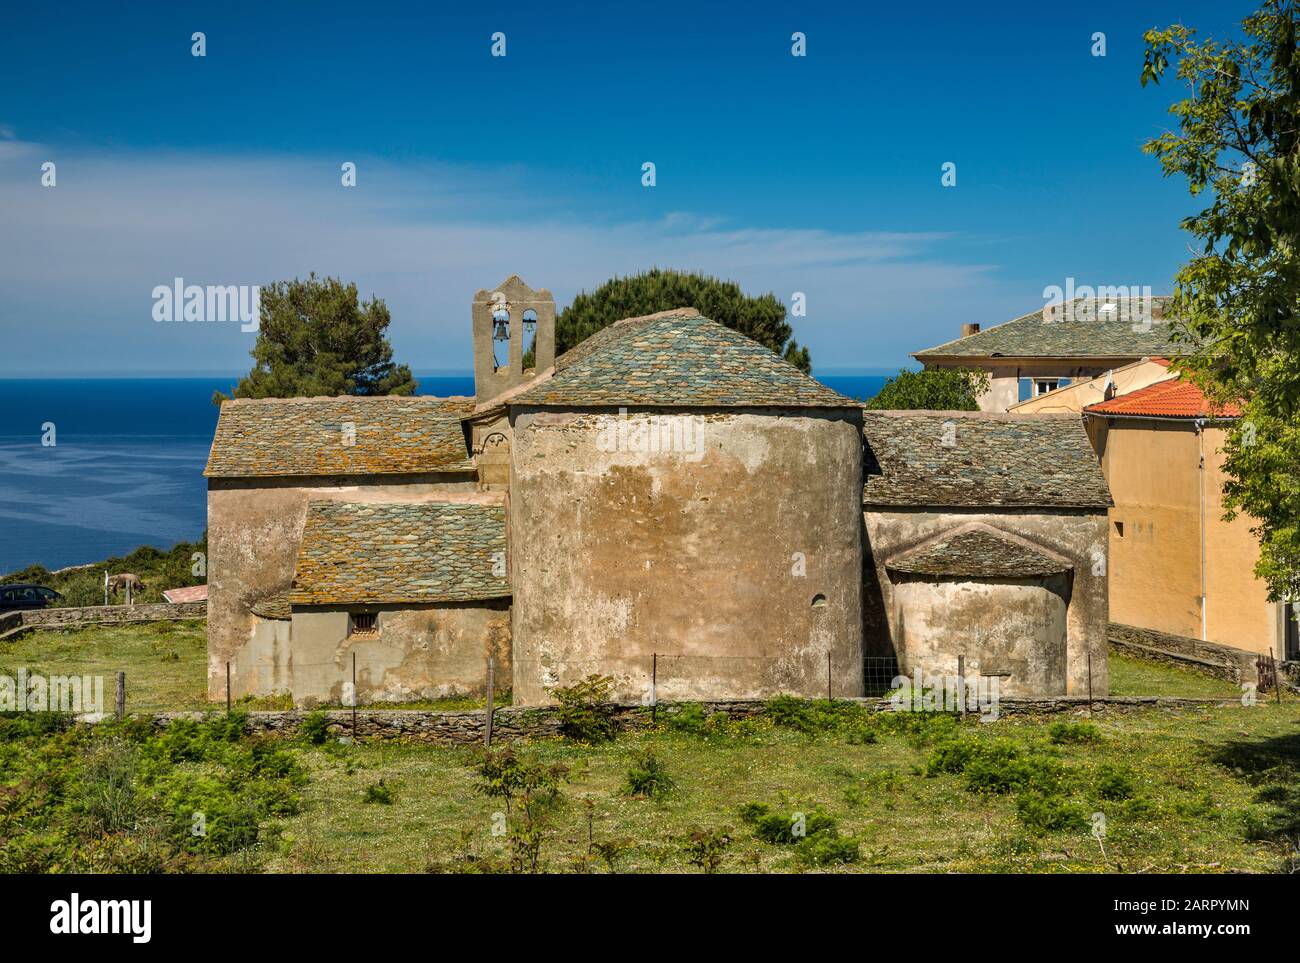 Eglise Santa Maria Assunta, 12th century church, Romanesque-Pisan style, in village of Canari, Cap Corse, Haute-Corse, Corsica, France Stock Photo